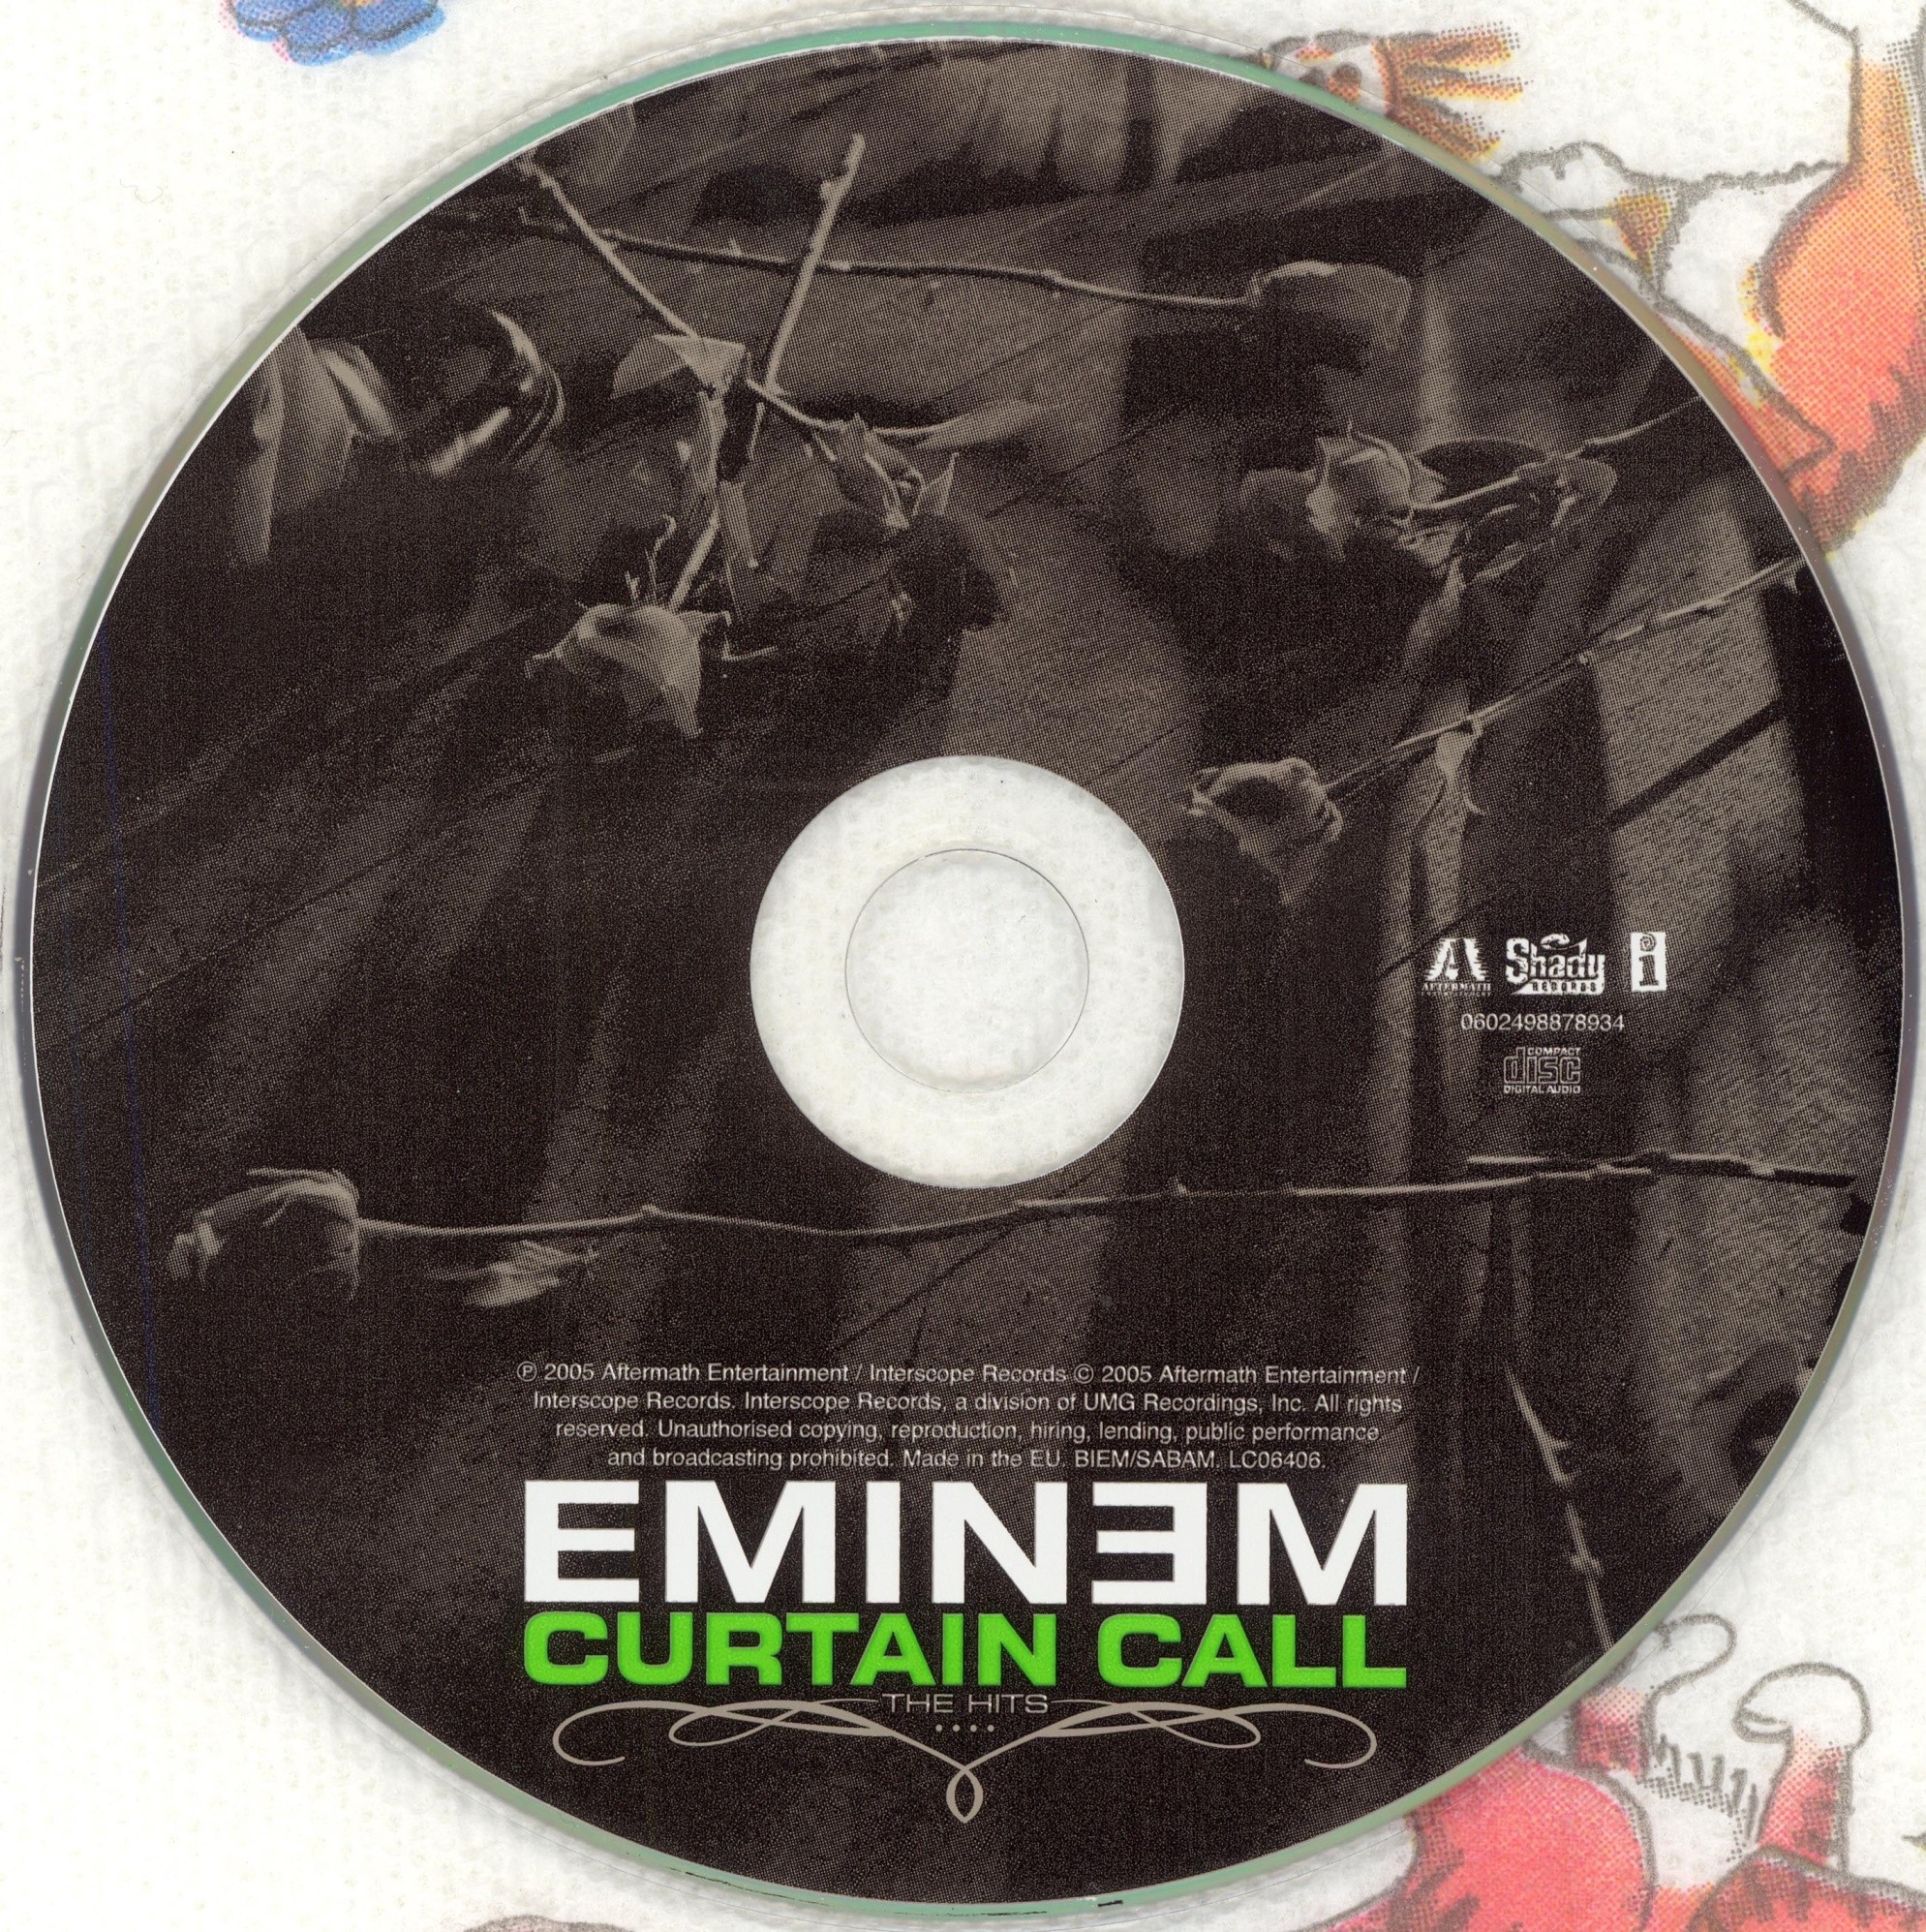 Eminem recovery album